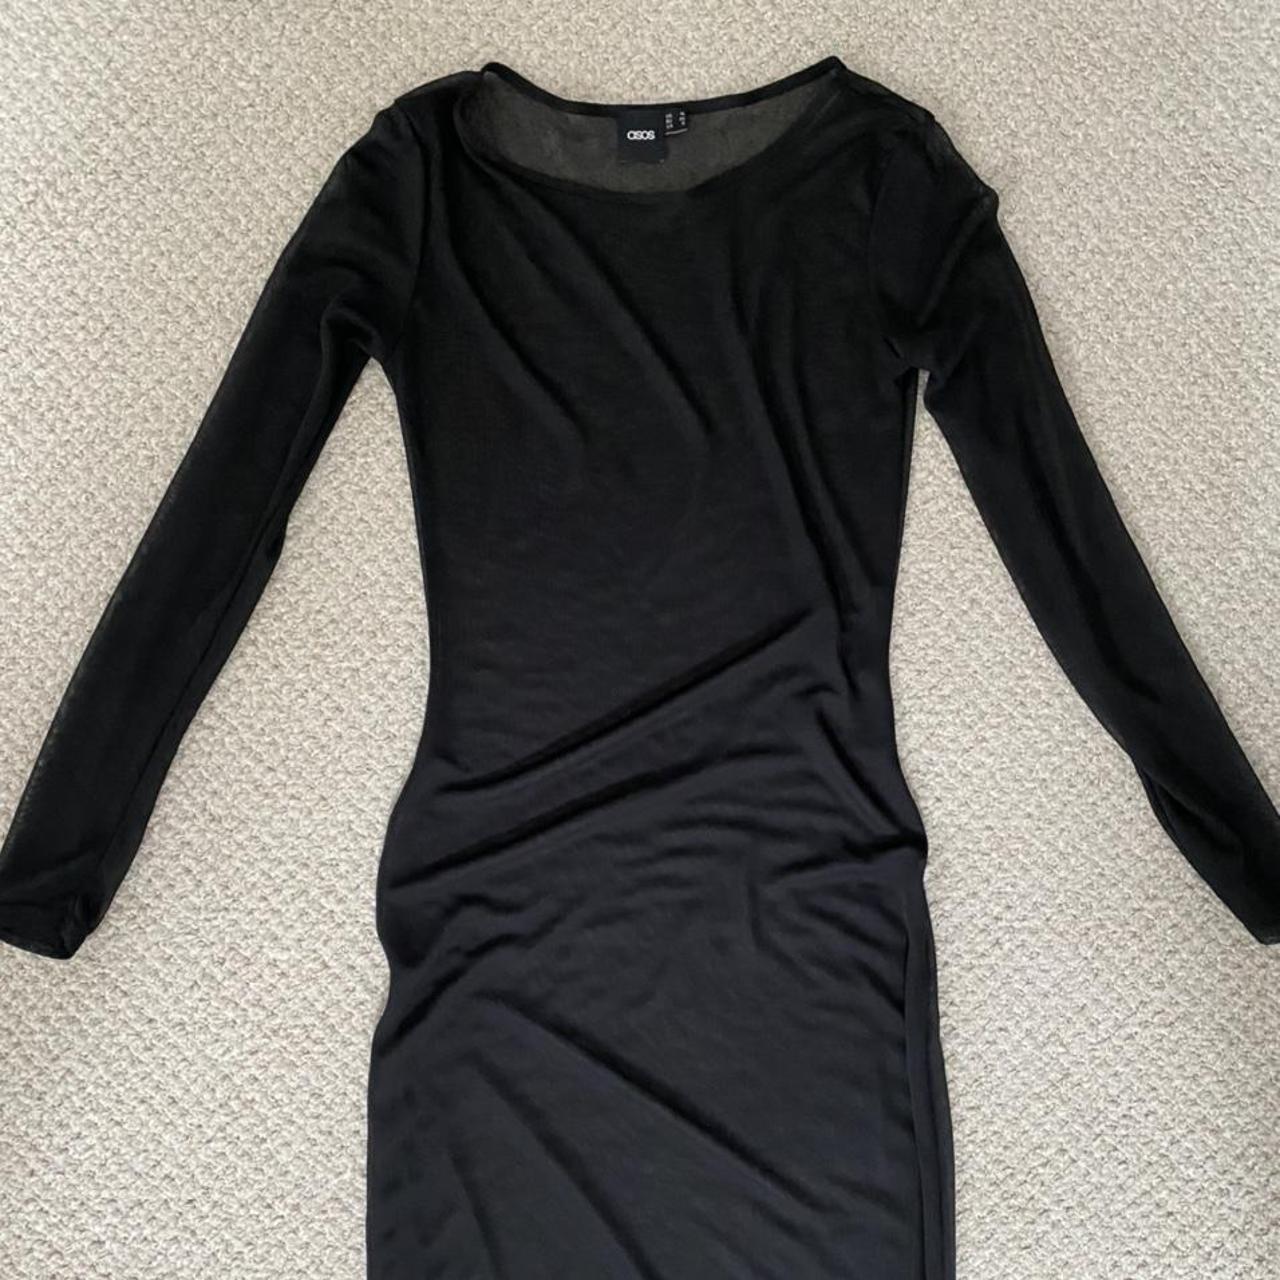 ASOS Women's Black Dress